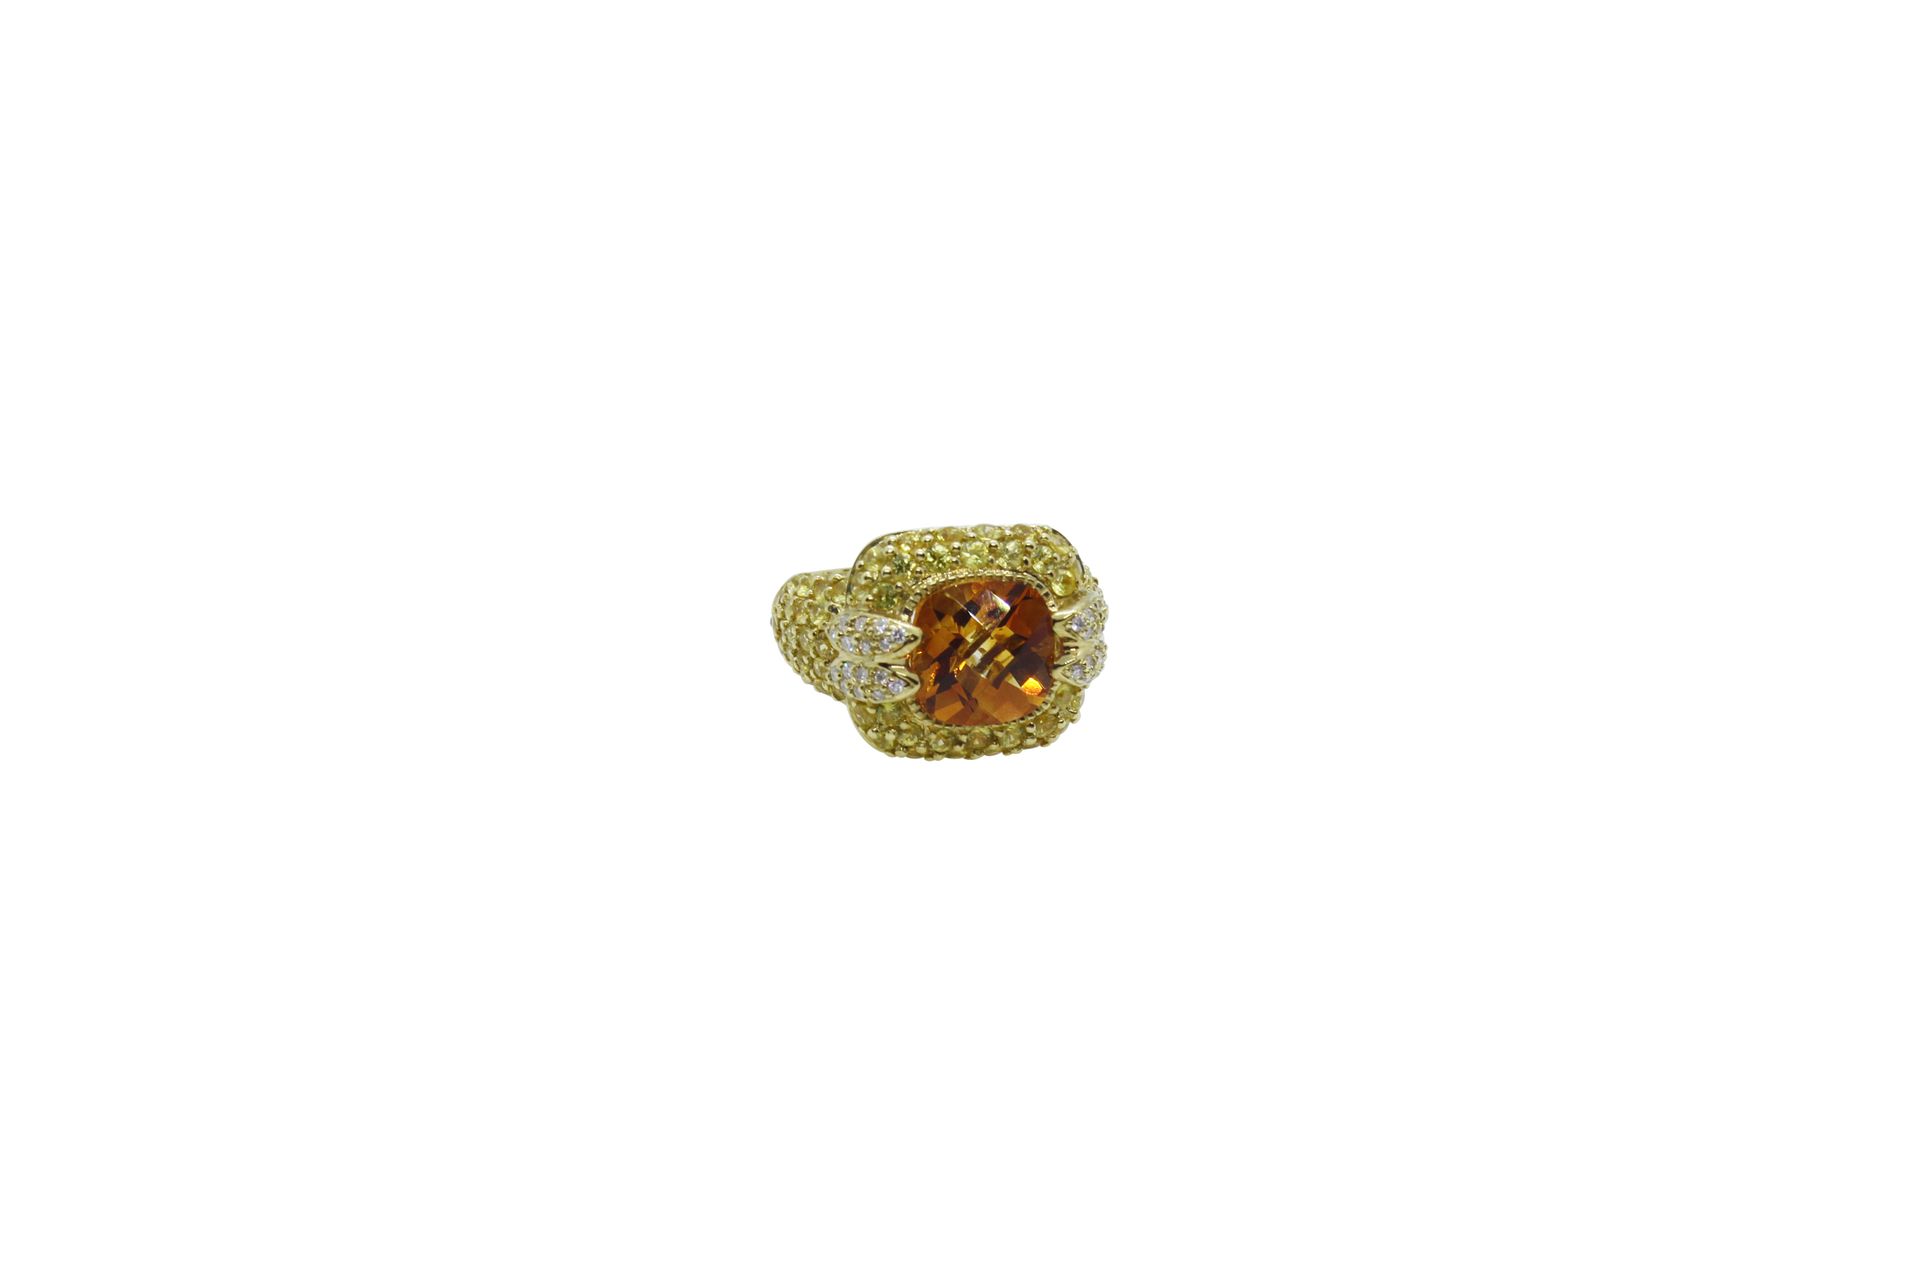 18k gold ring with yellow diamonds 镶嵌黄钻的18K金戒指。毛重约11克。尺寸：55。